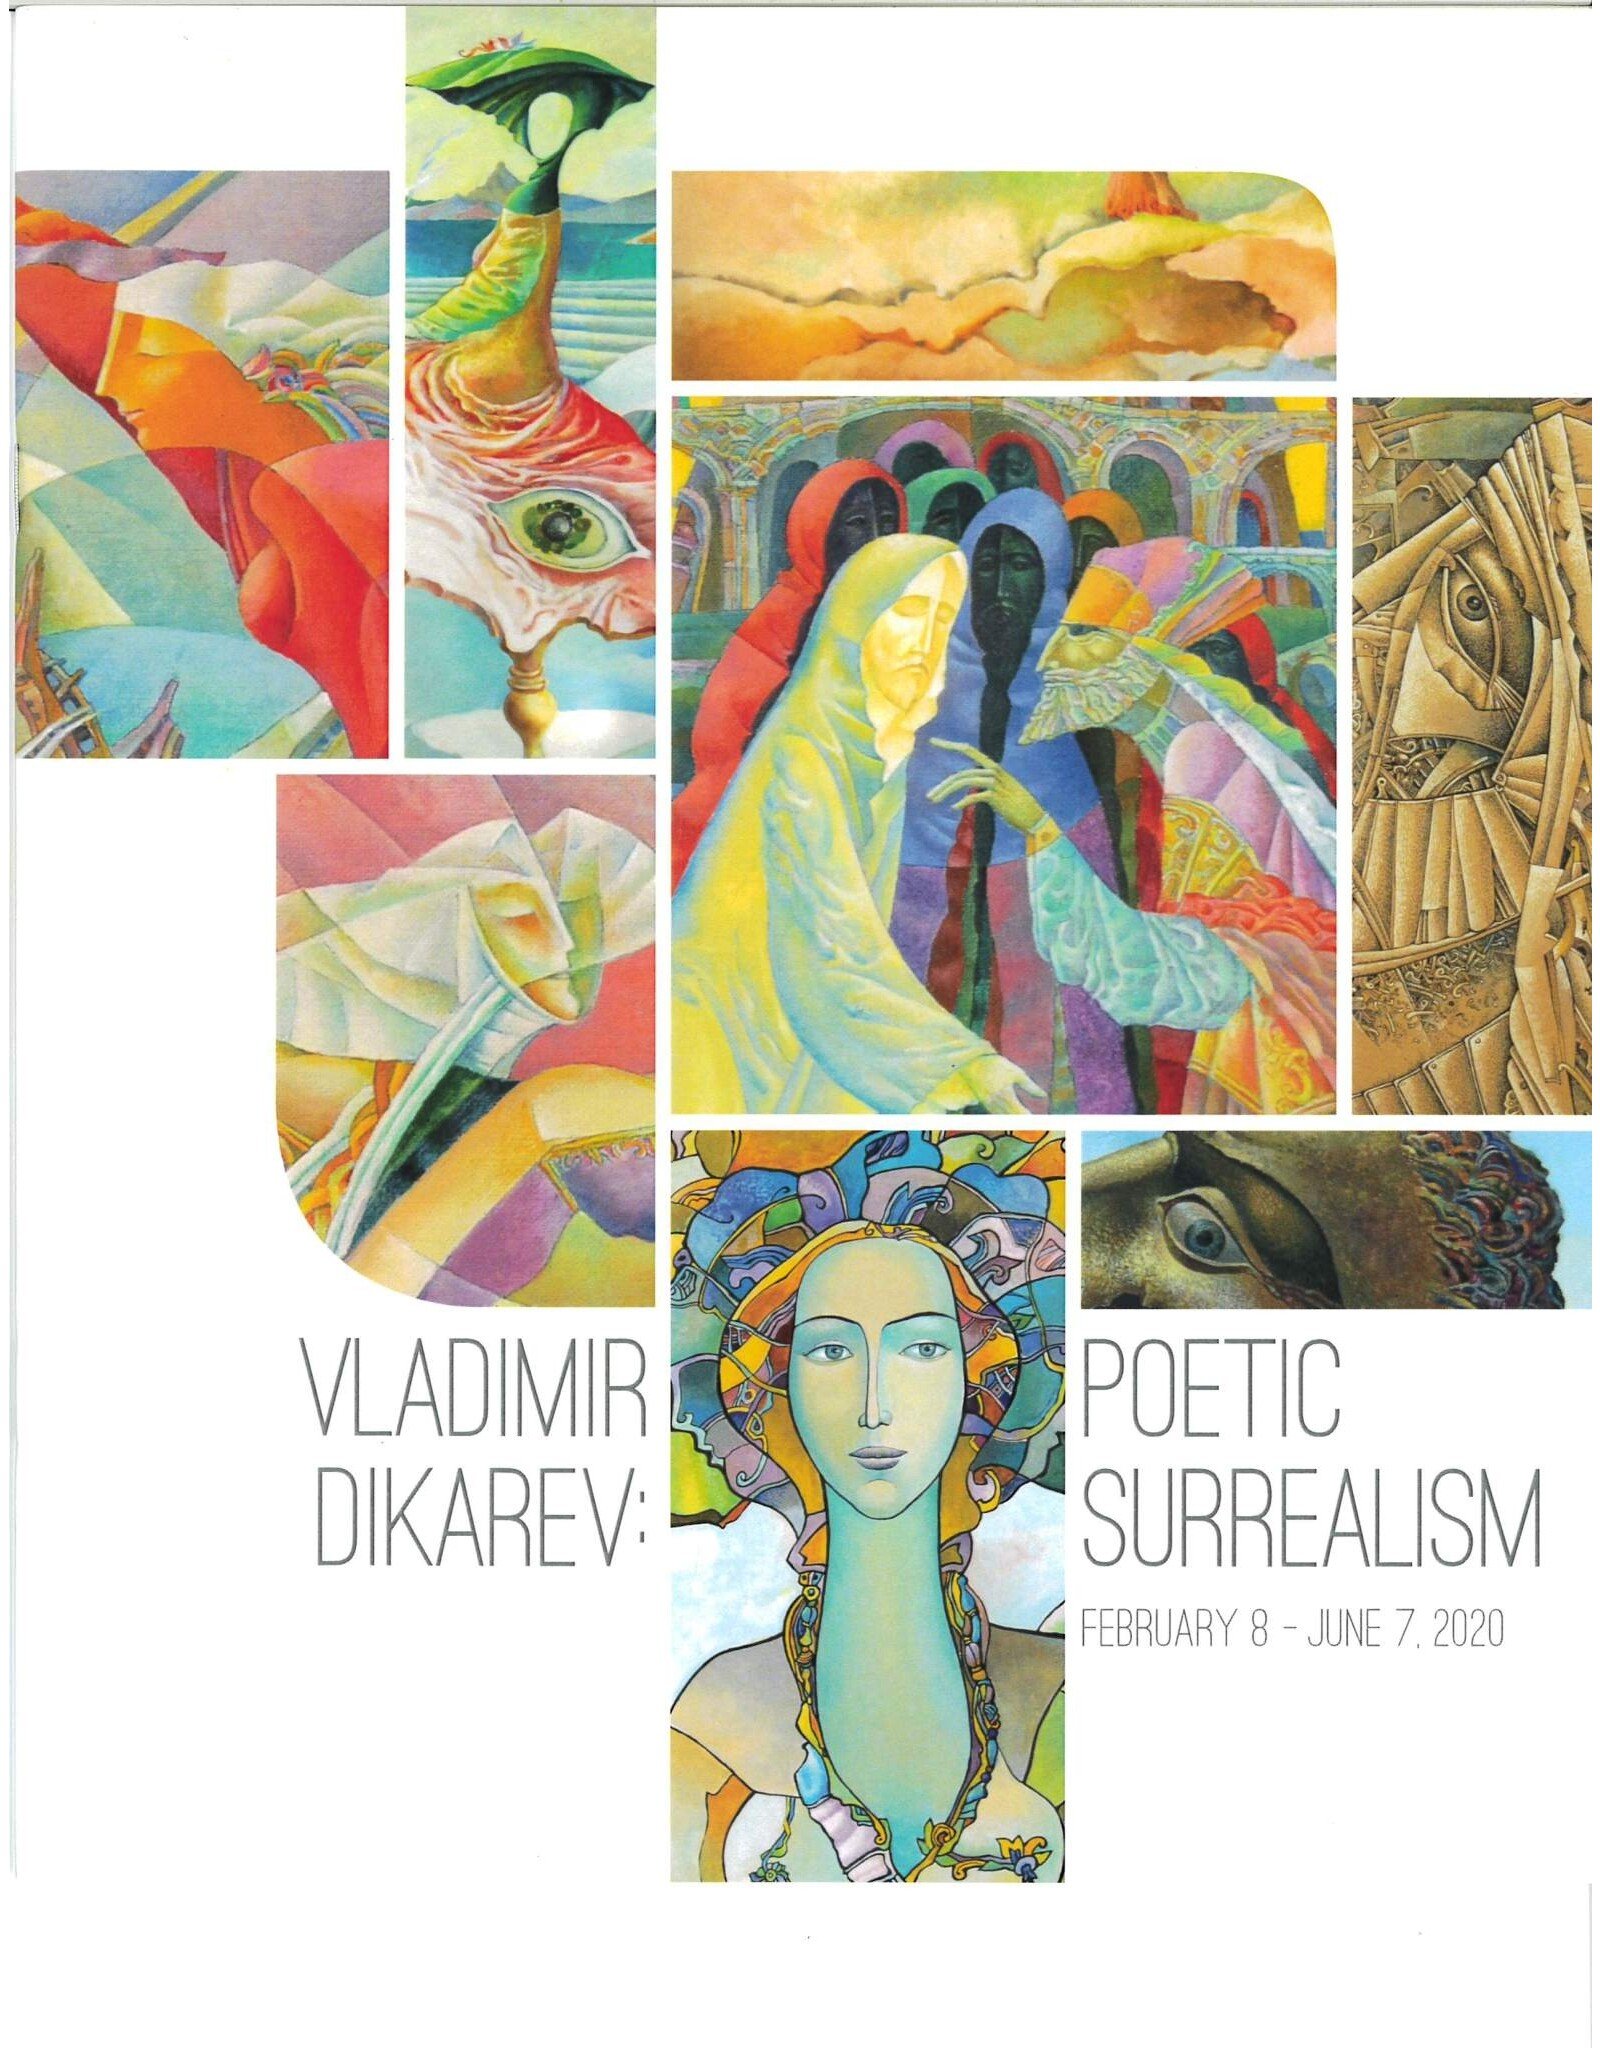 Vladimir Dikarev: Poetic Surrealism Catalog